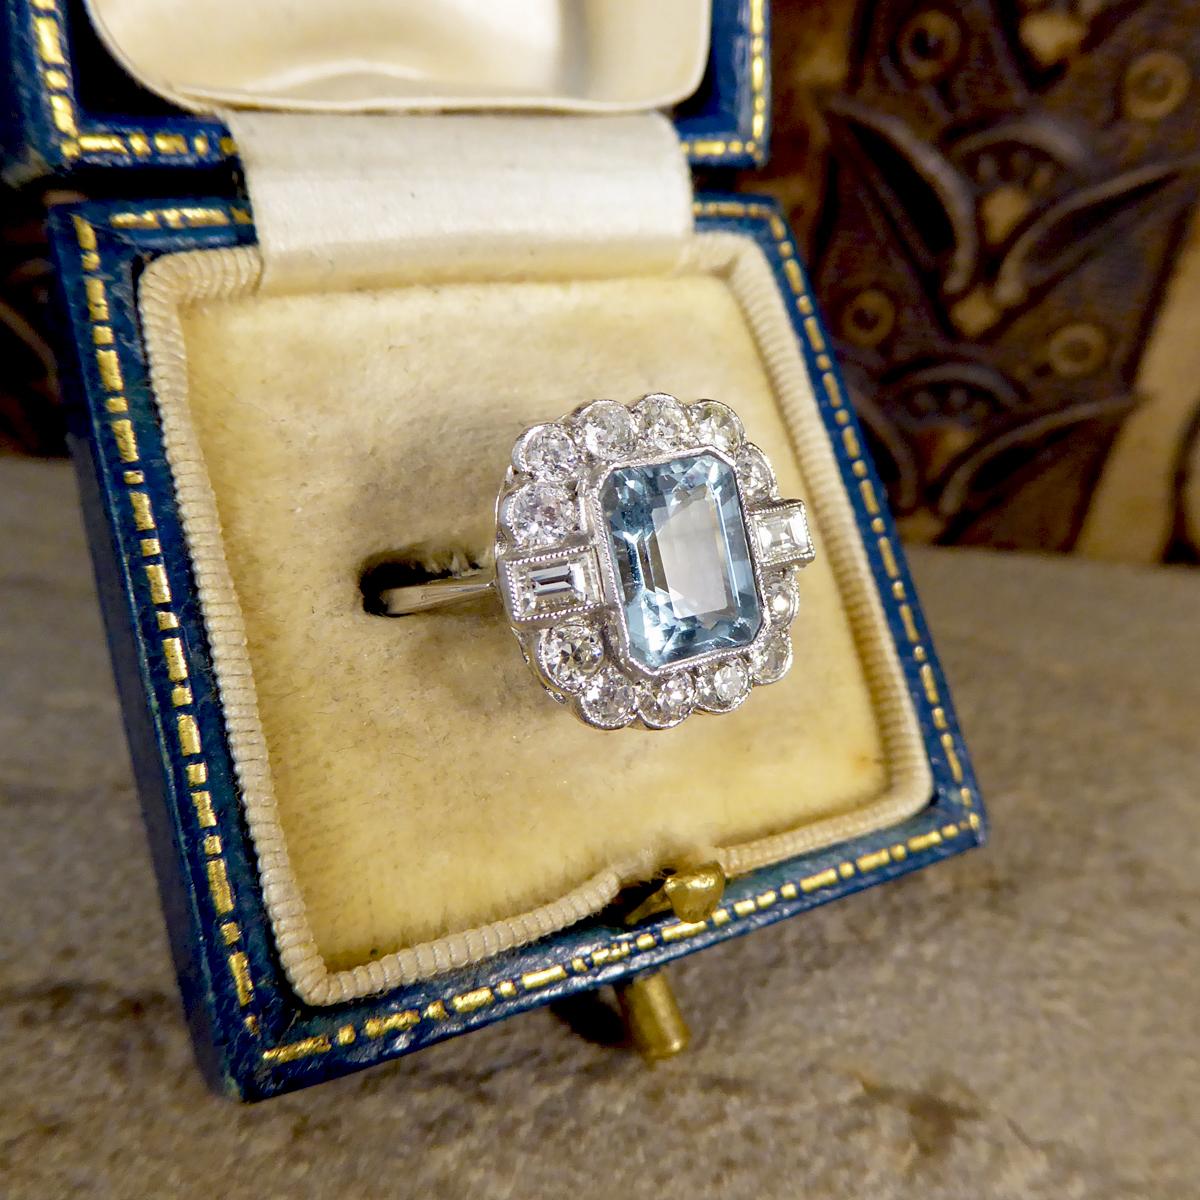 Contemporary Edwardian Style 1.60 Carat Aquamarine and Diamond Ring in Platinum 4